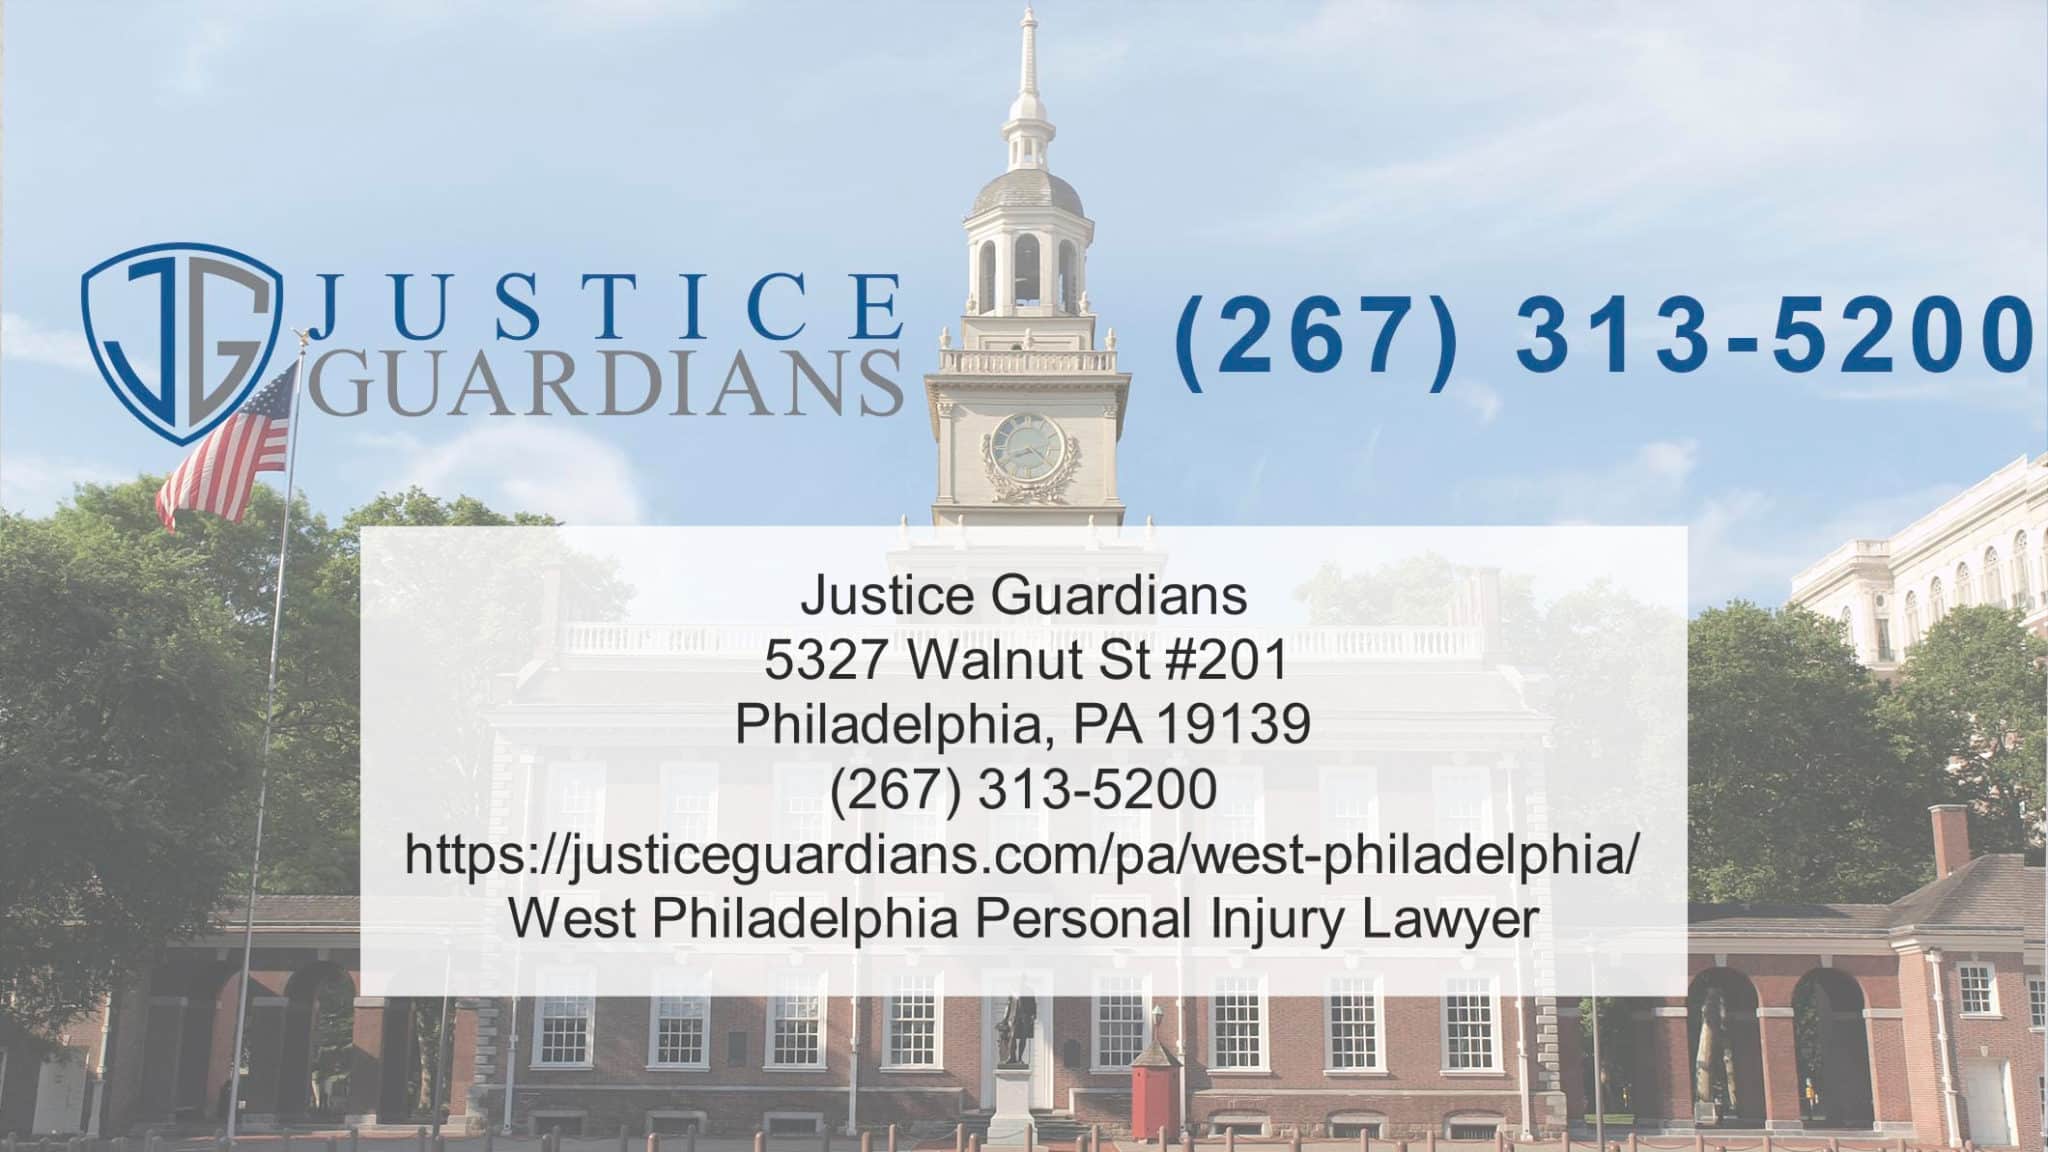 Personal-Injury-Lawyer-Near-Me-West-Philadelphia-Justice-Guardians-scaled-1.jpeg